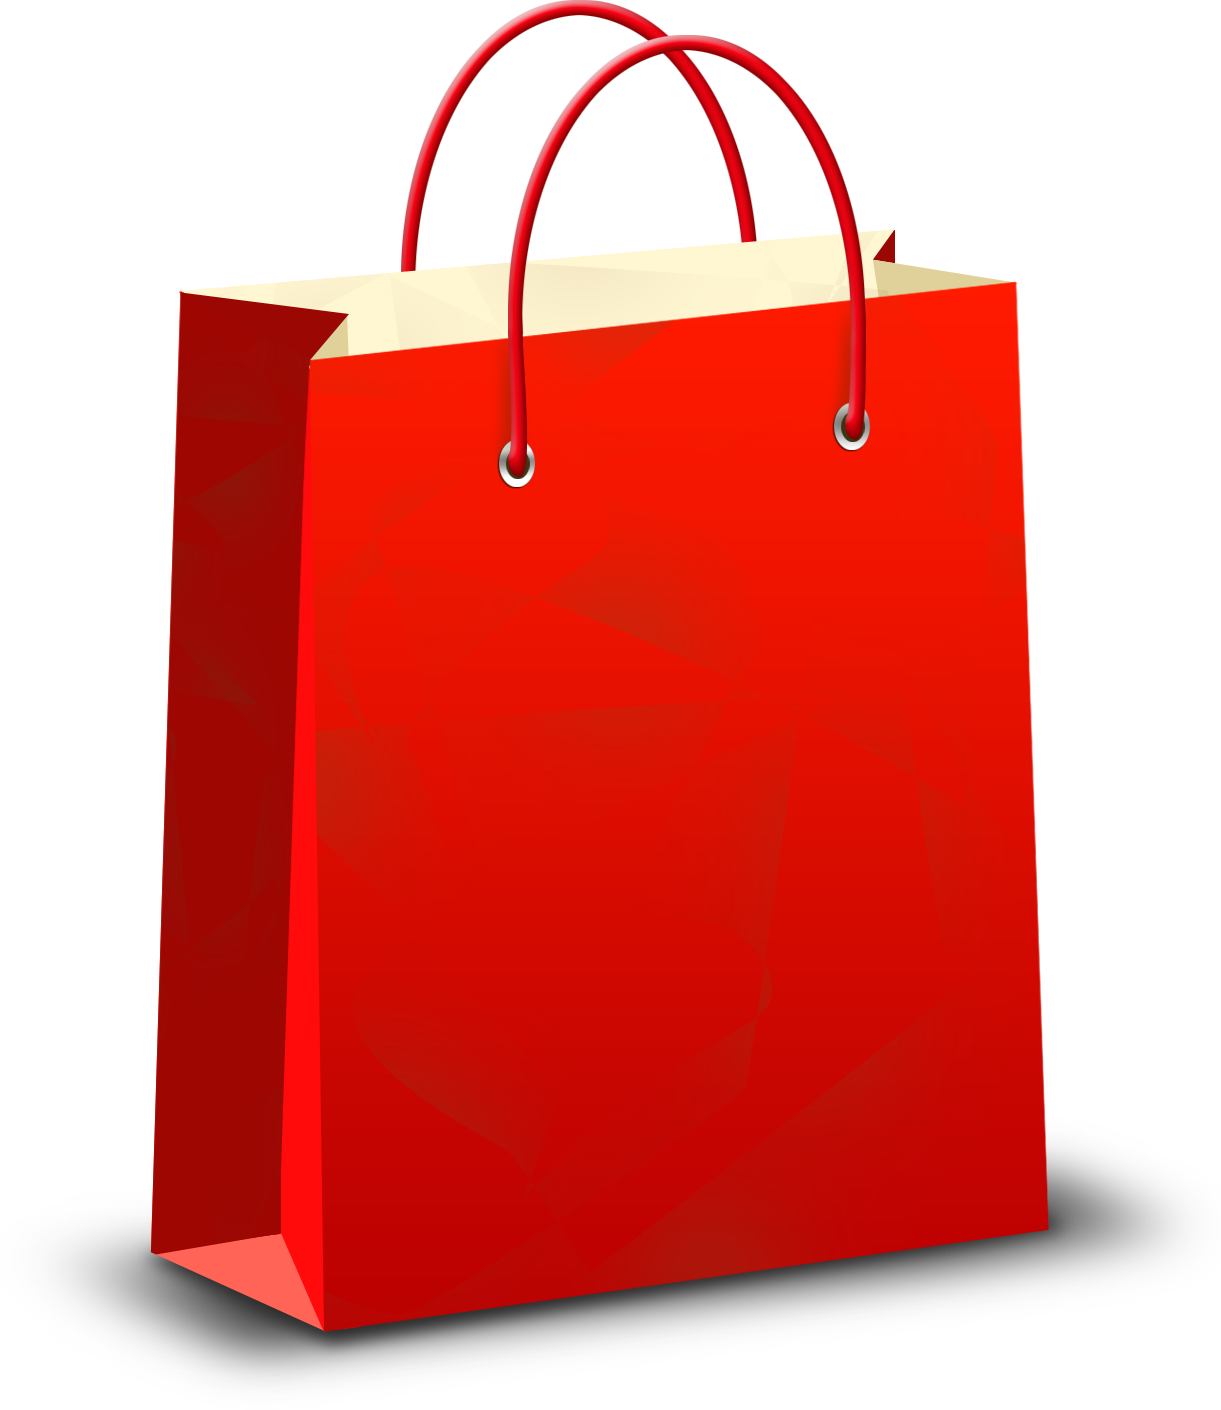 Paper Shopping Bag Png Image - Shopping Bag, Transparent background PNG HD thumbnail